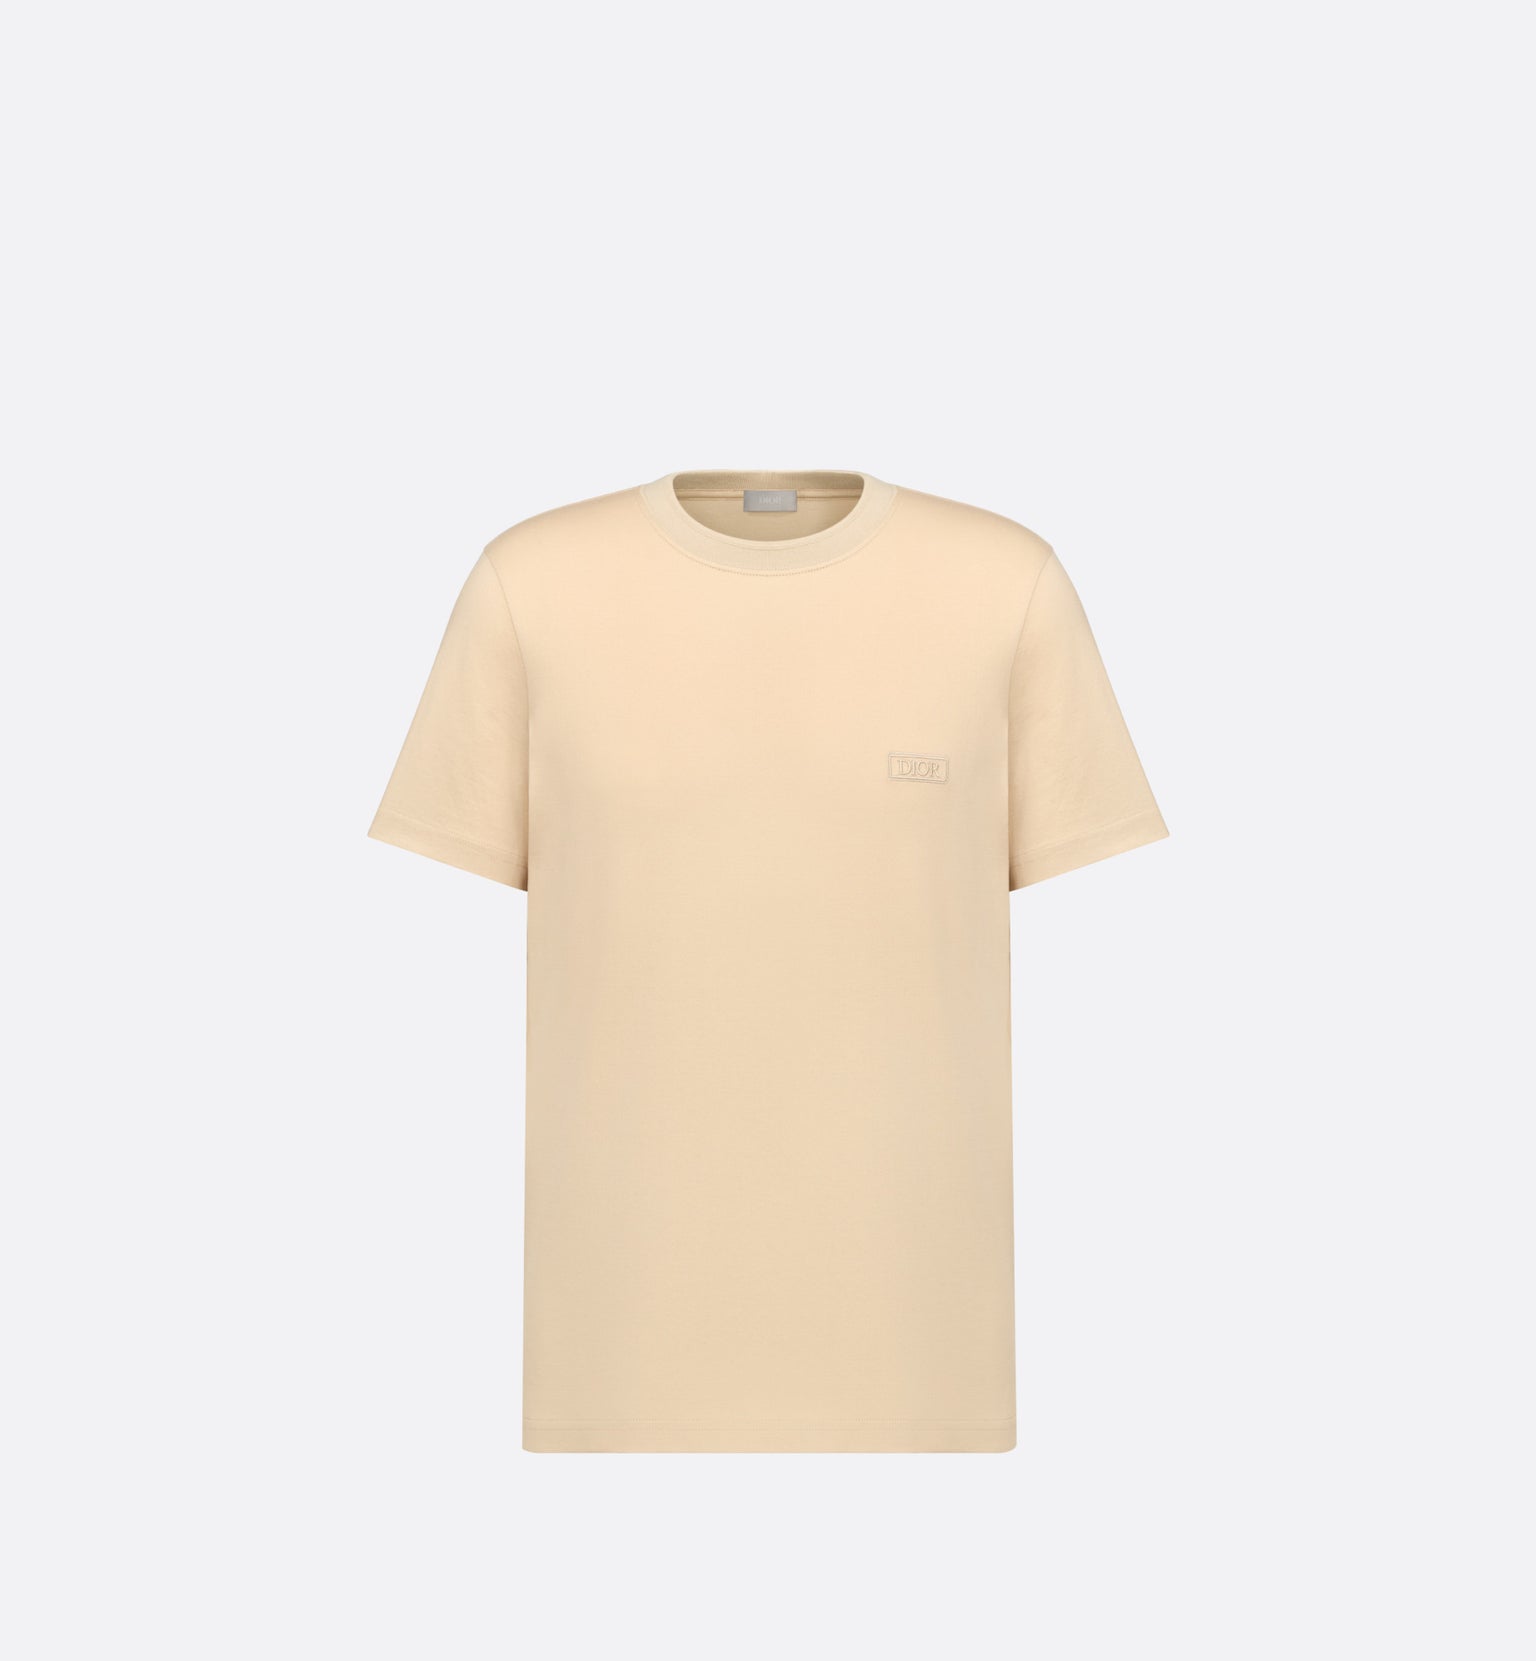 Dior Icons T-Shirt • Beige Sea Island Cotton Jersey